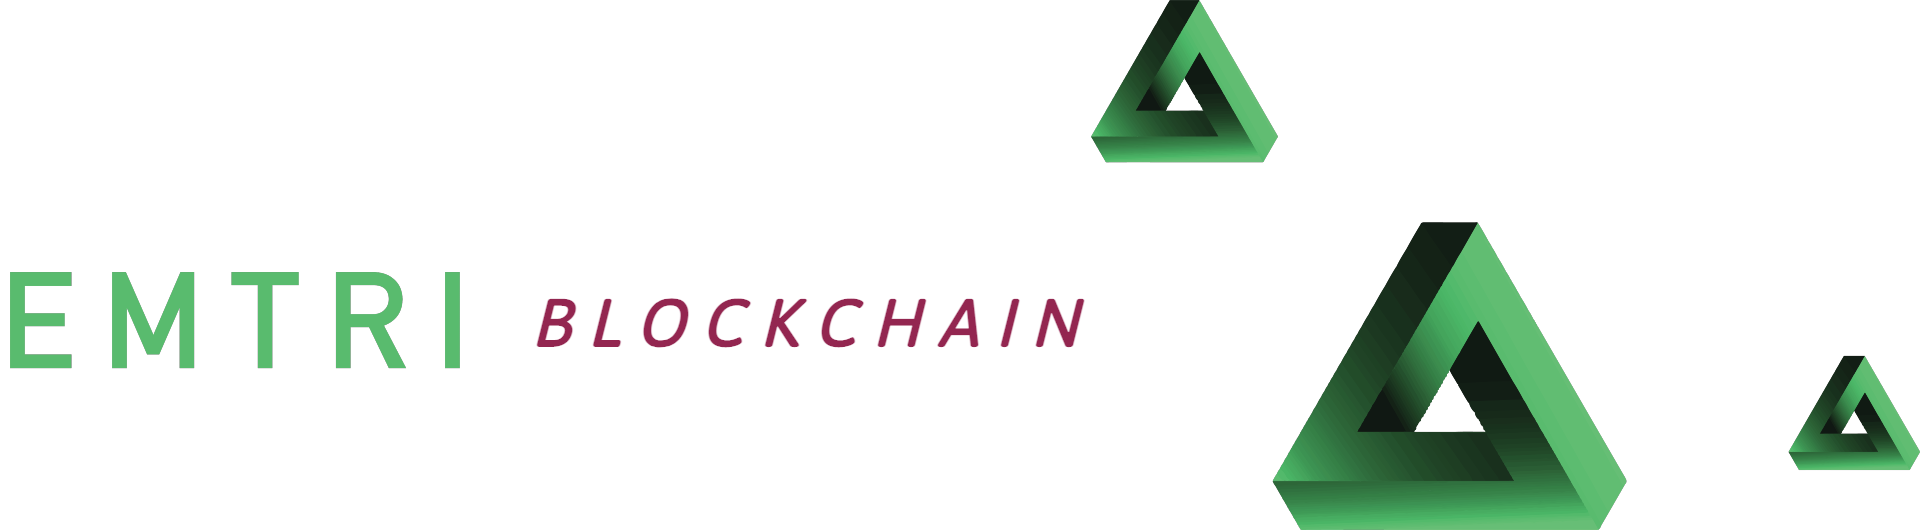 EMTRI_Blockchain_Logo_v1